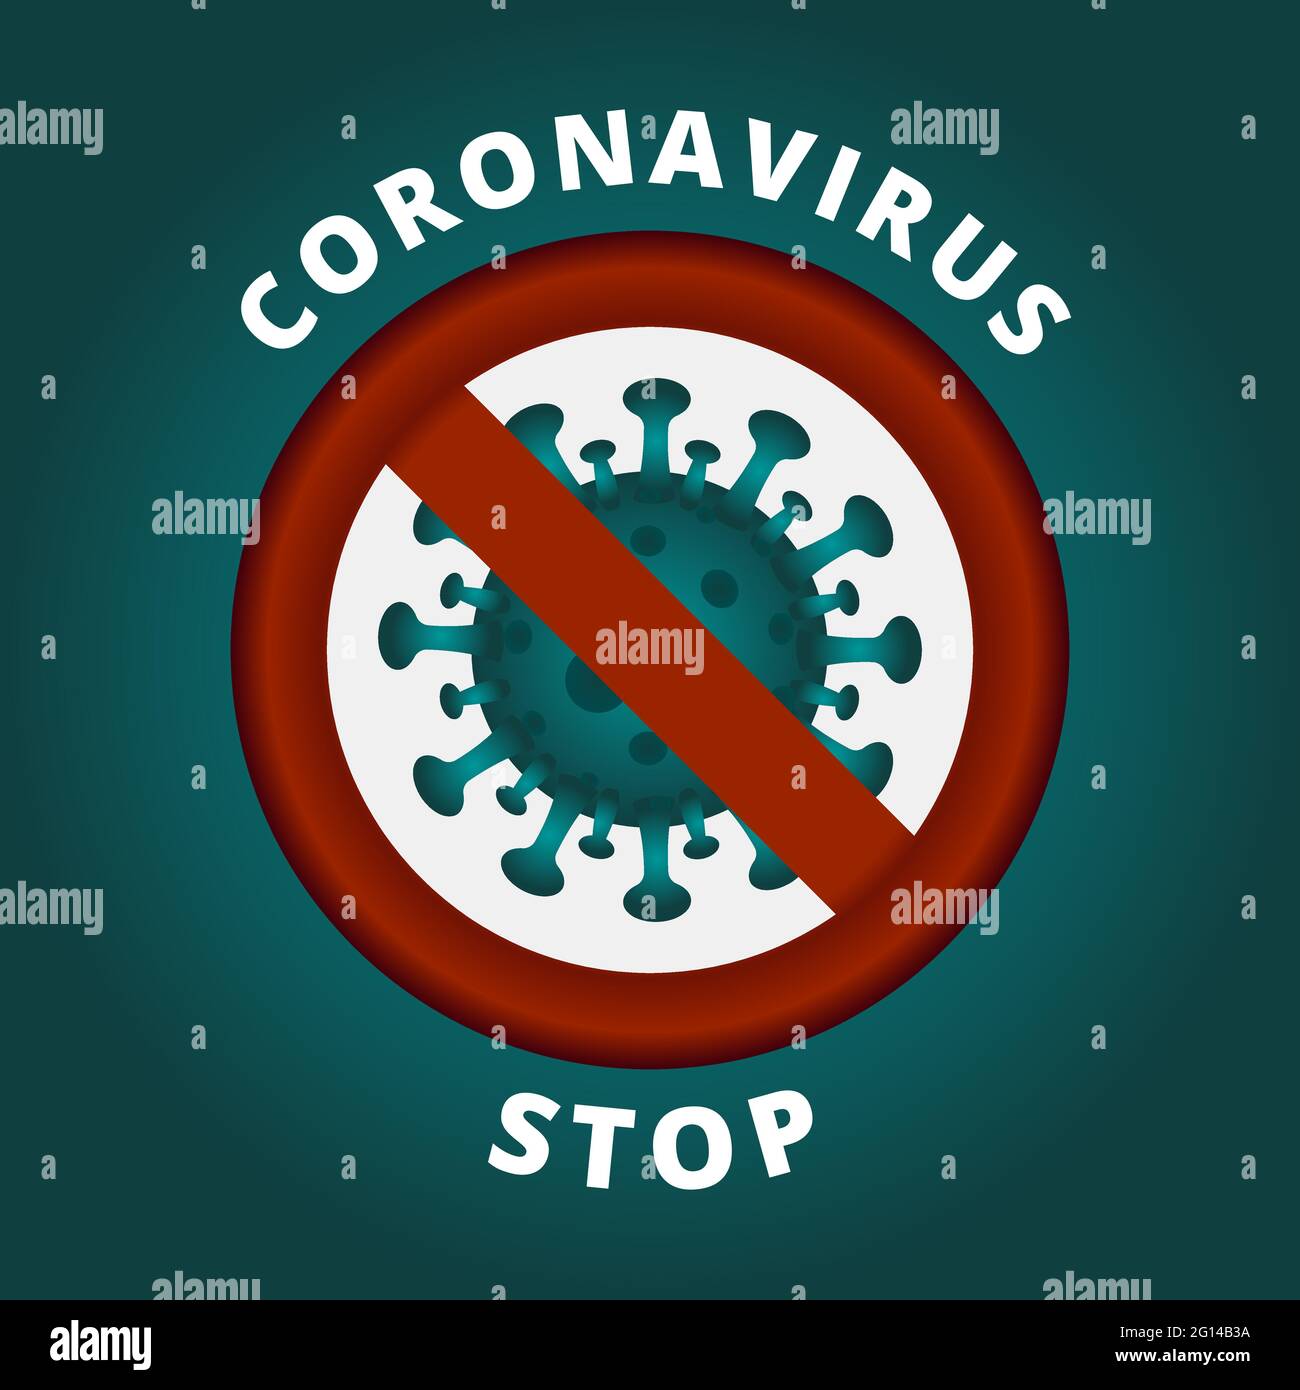 Stop coronavirus icon in red prohibitory round sign. Pandemic stop novel coronavirus outbreak covid-19. Danger of infection 2019-ncov novel Stock Vector